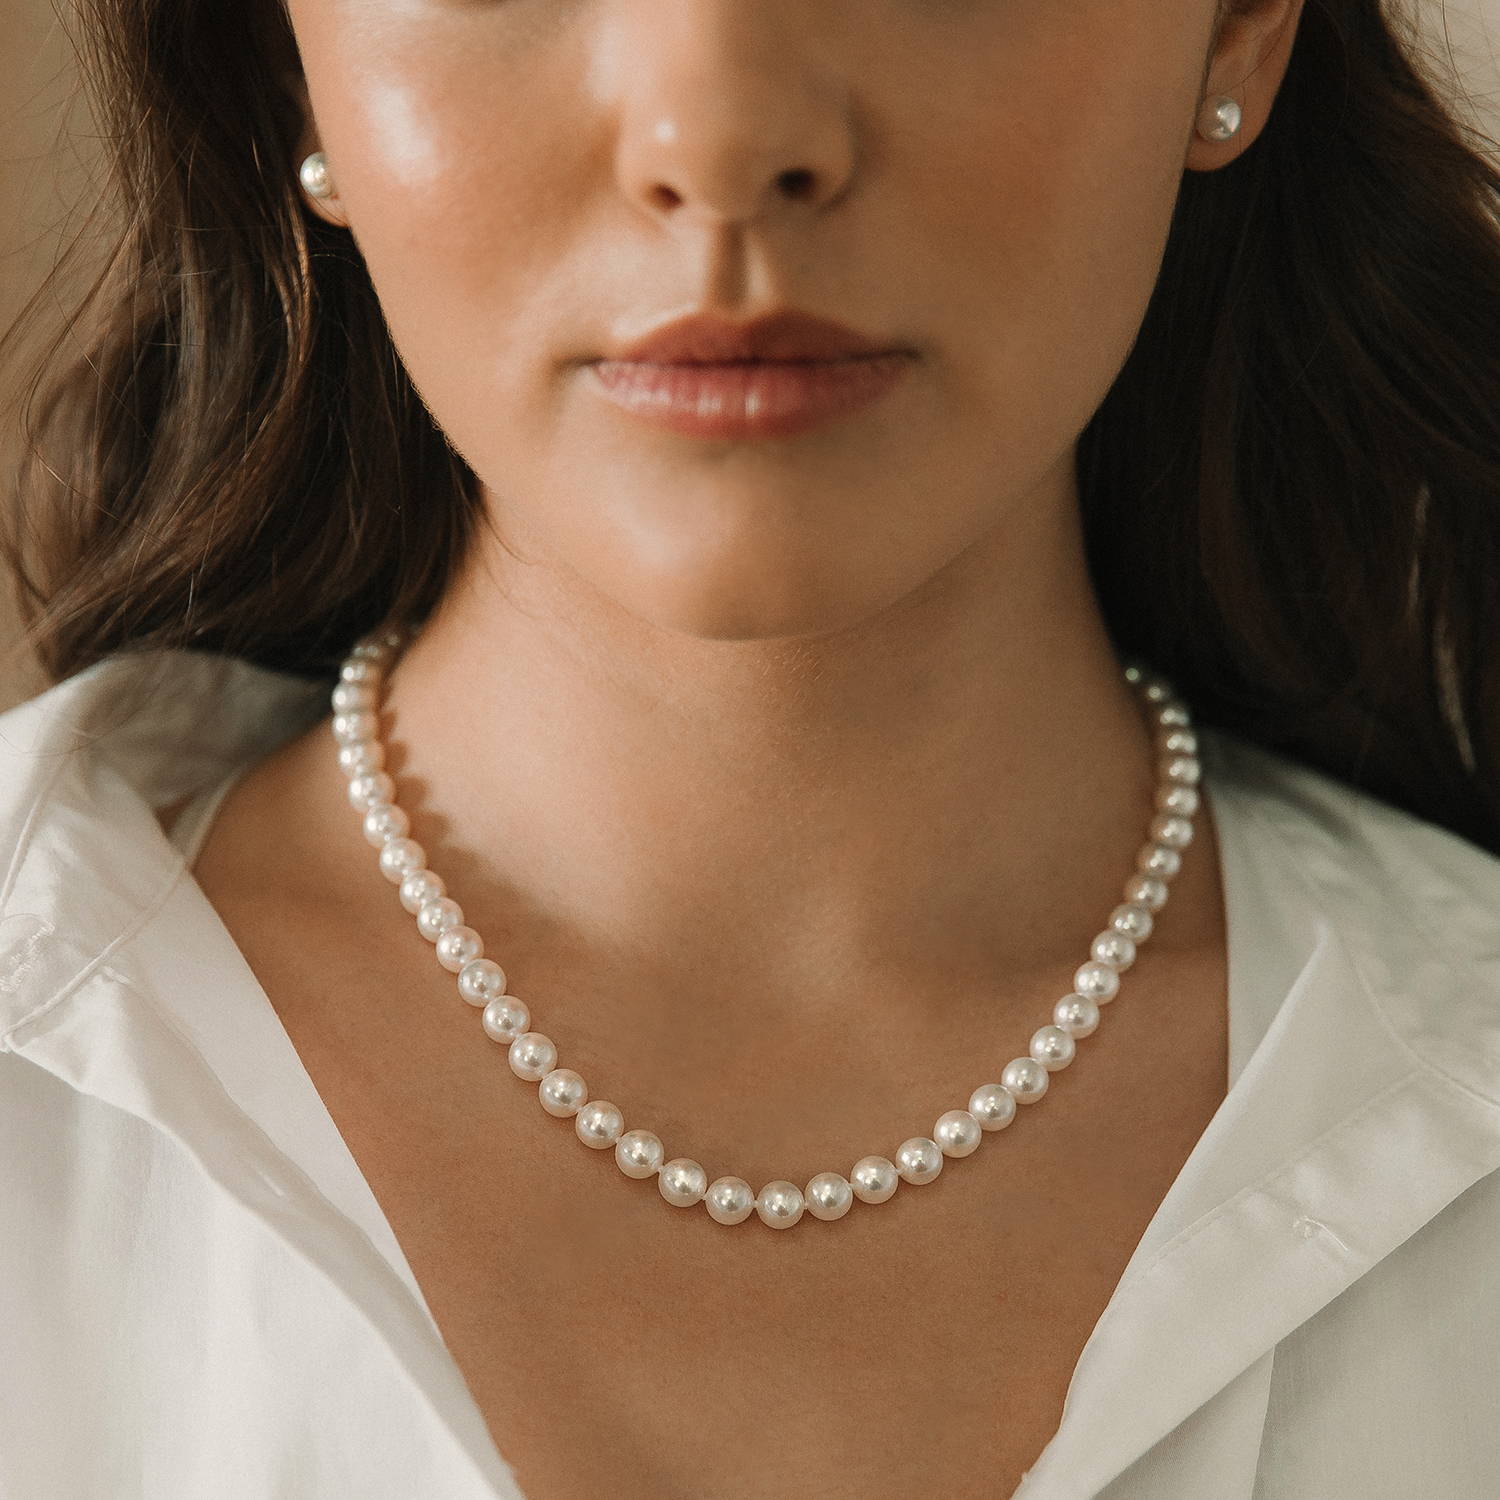 Hanadama Pearl Necklace Close Up on Model